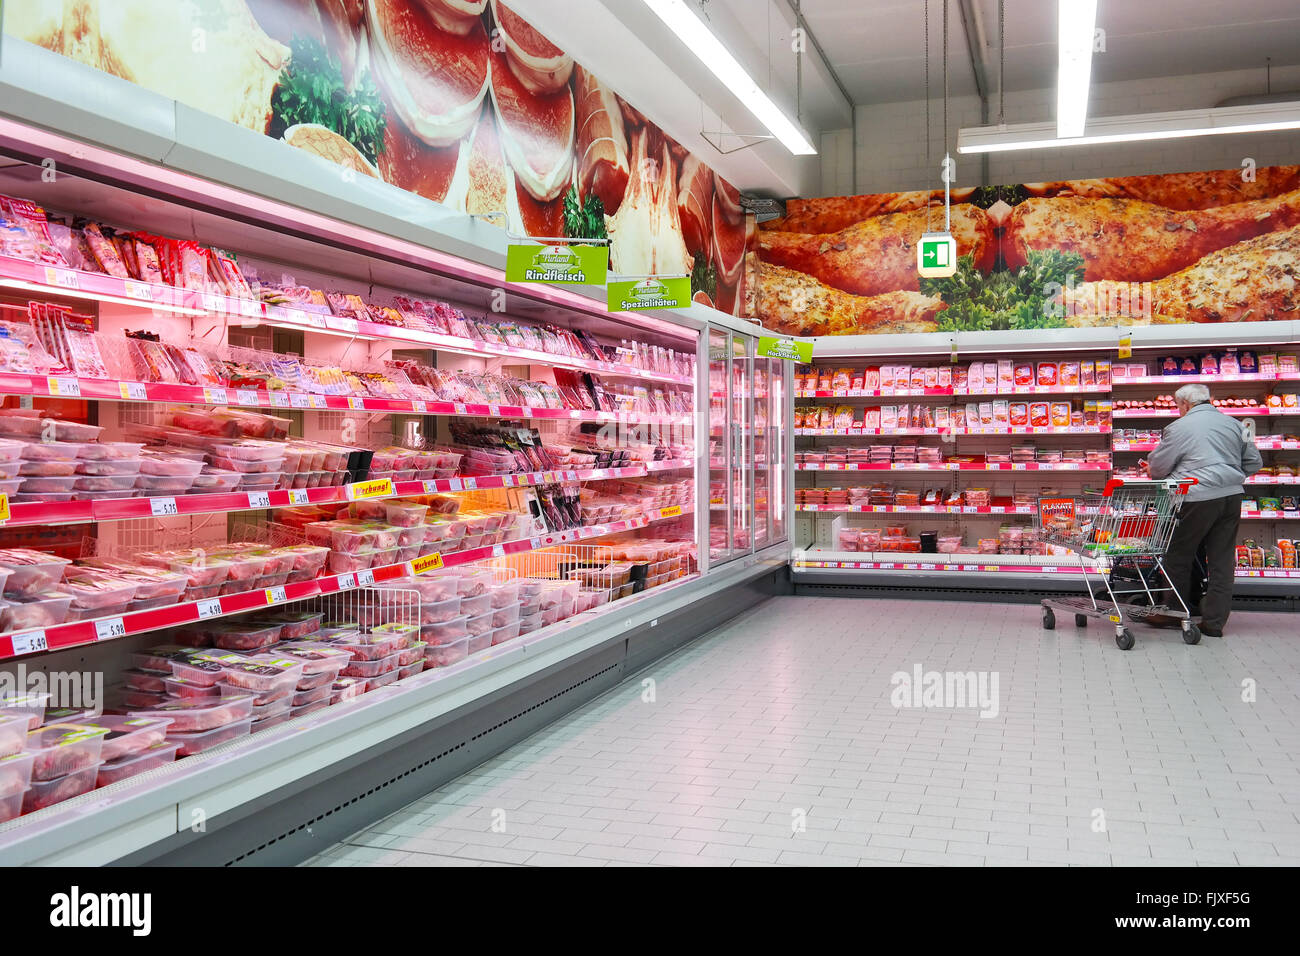 Butchery department of Supermarket Stock Photo